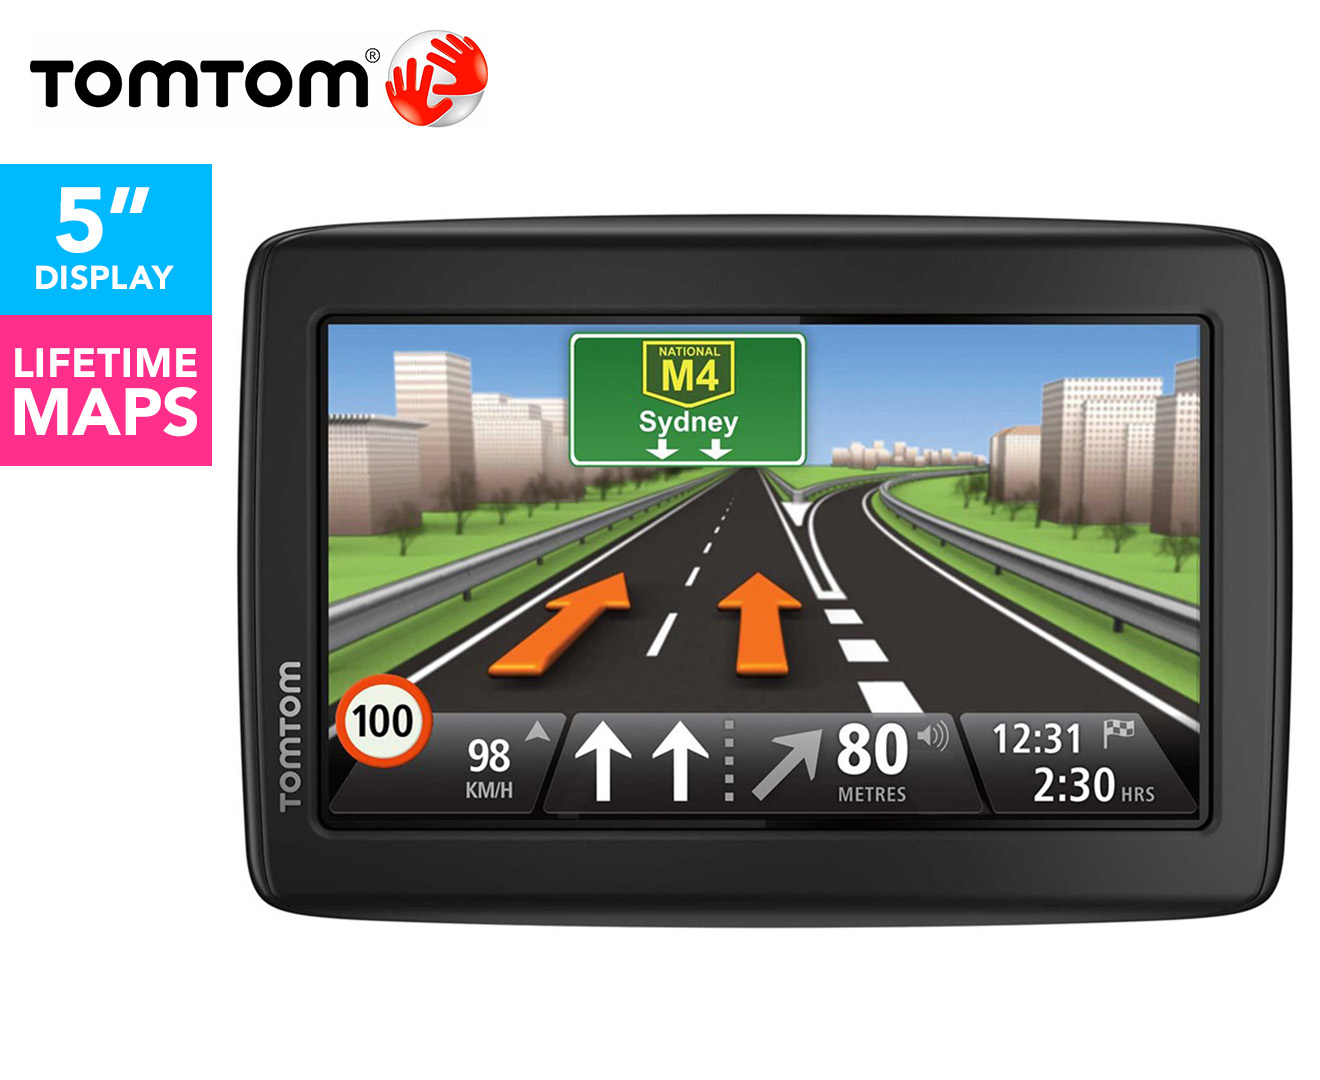 TomTom 5" Touchscreen Via 225 GPS - Black